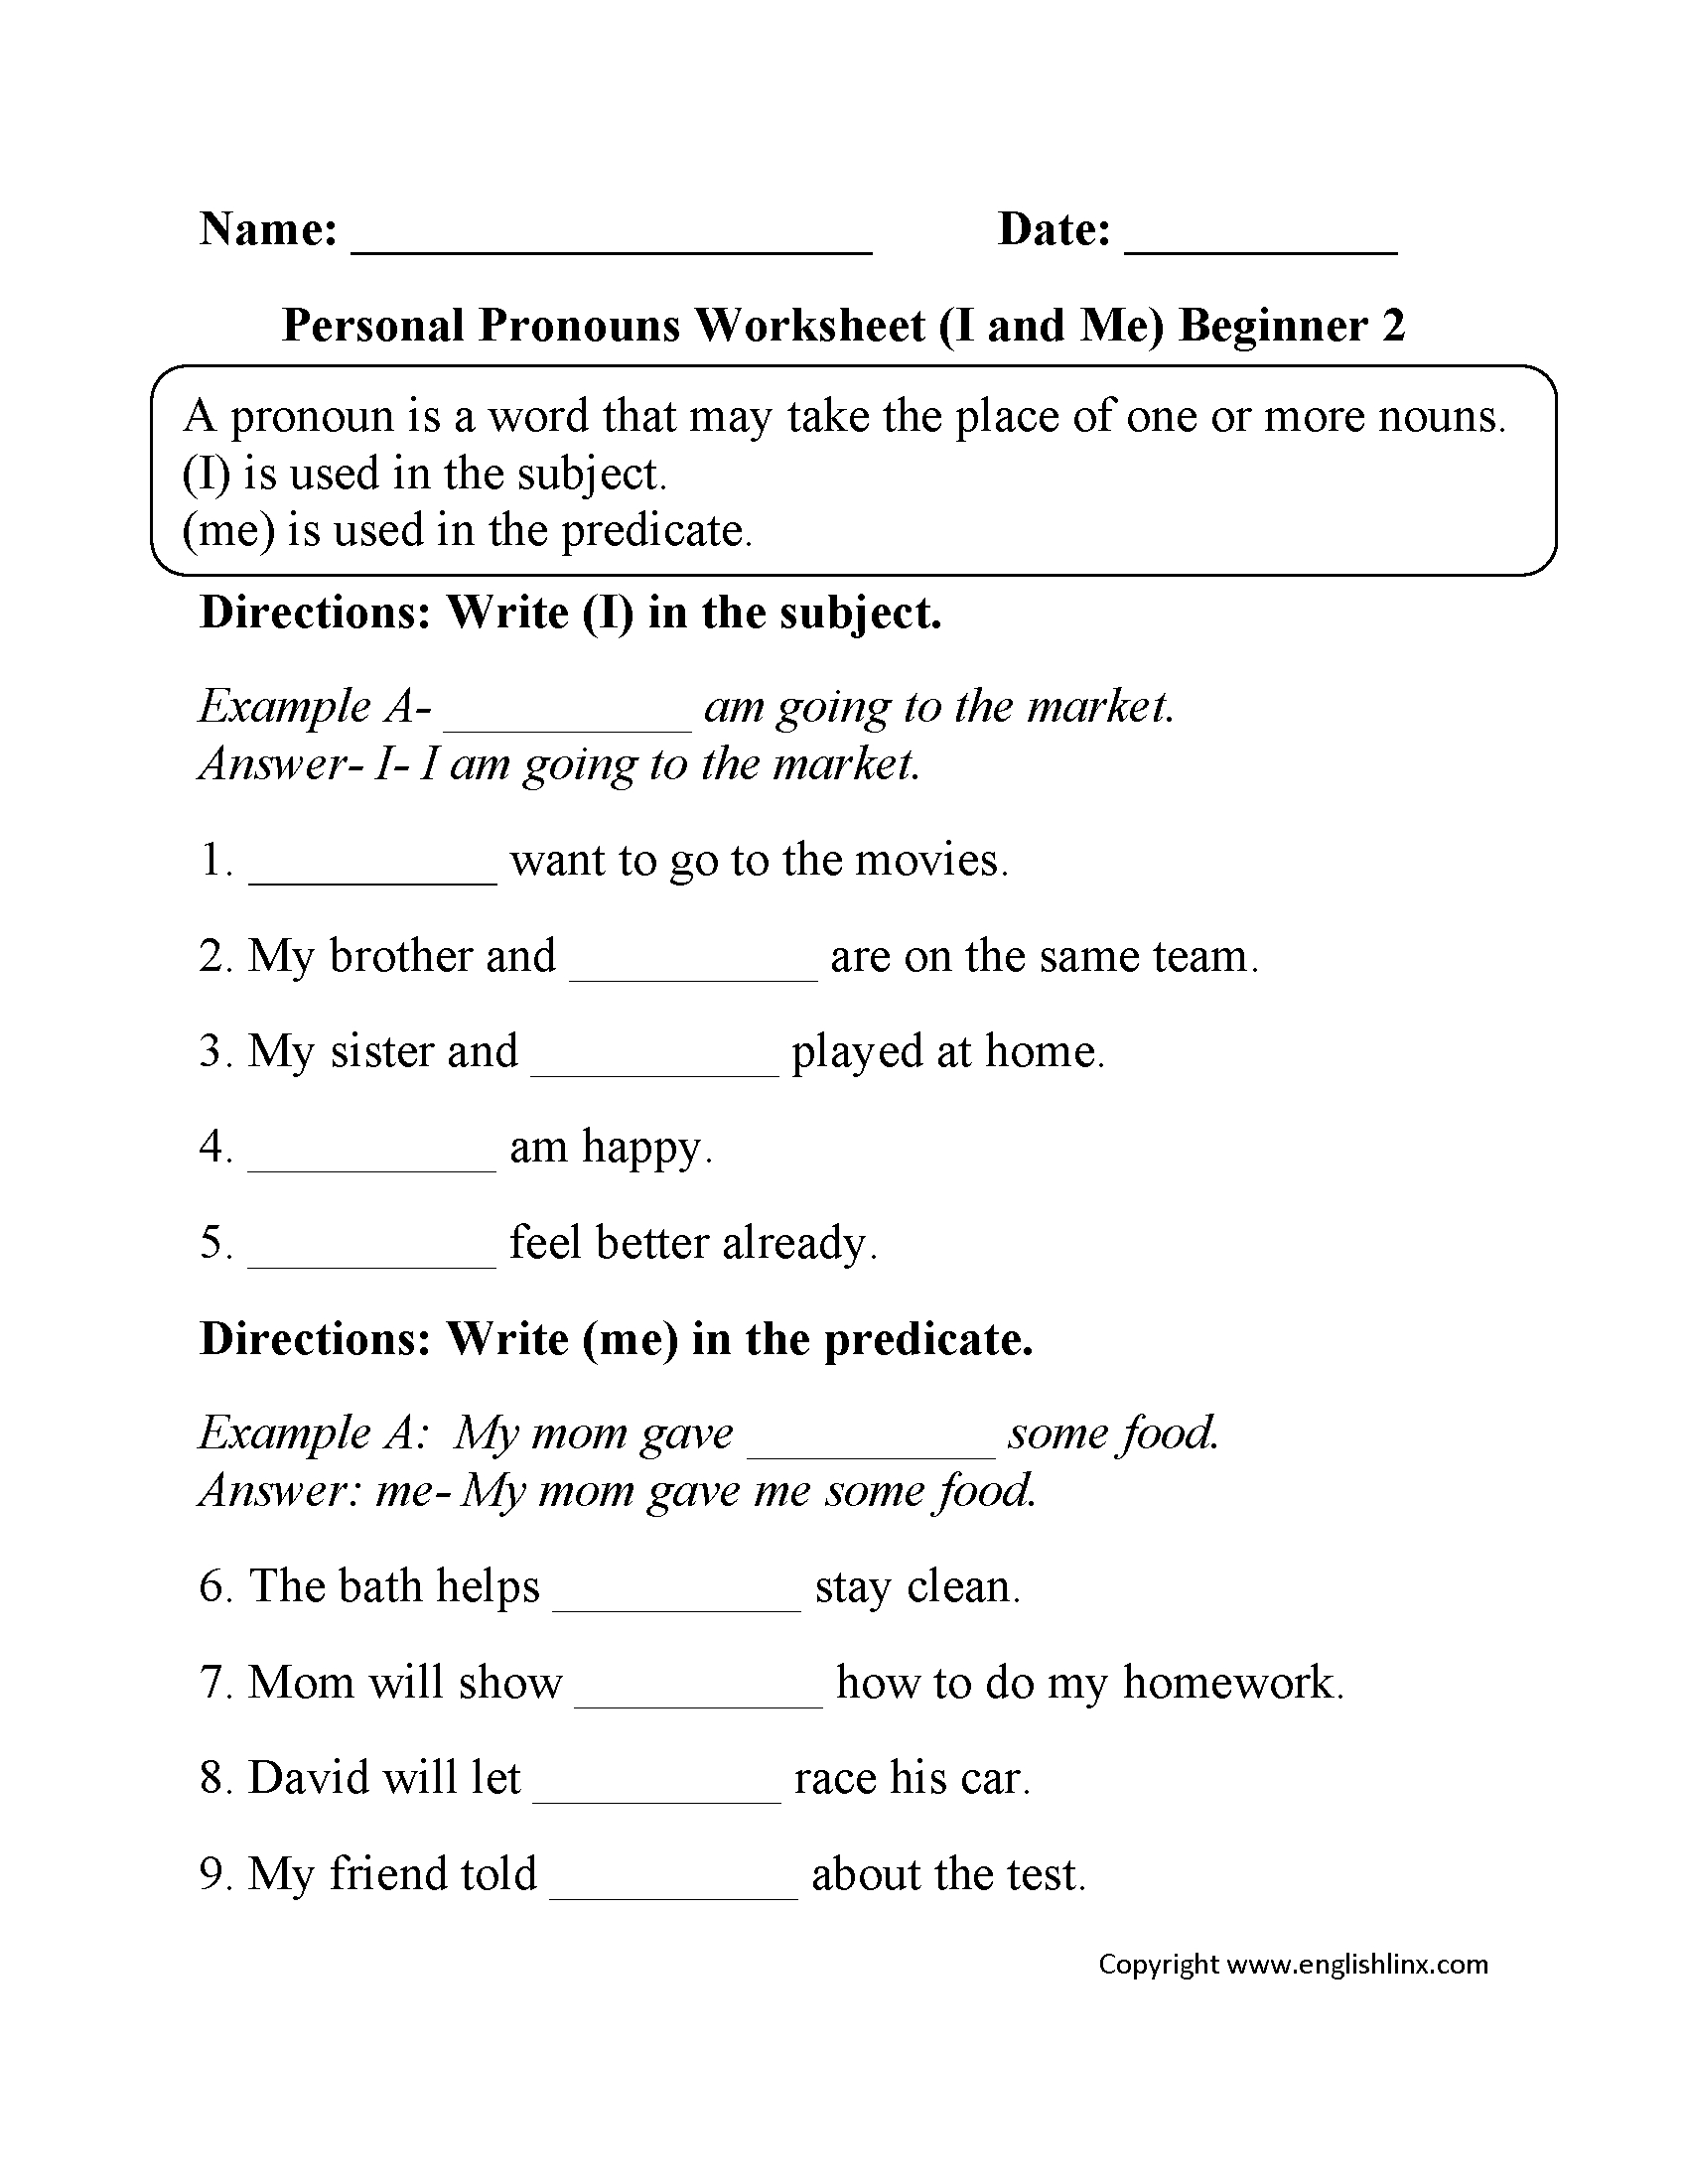 Object Pronouns Worksheet Grade 5